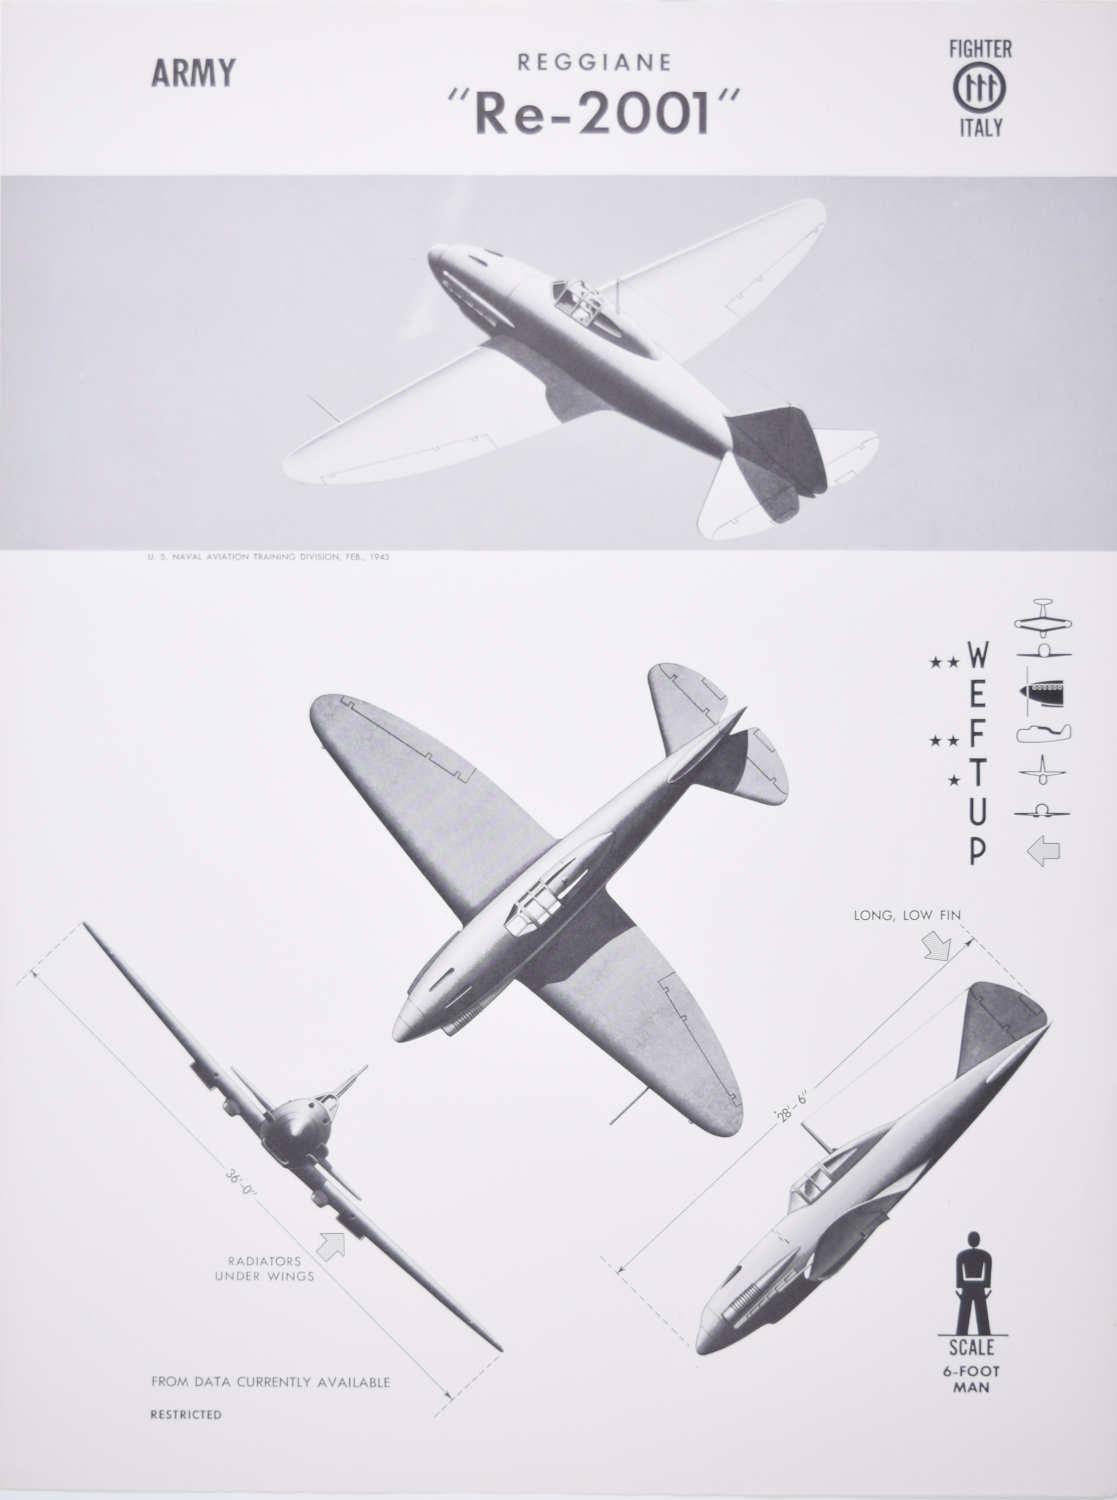 1942 Italian army Reggiane "Re-2001" fighter plane identification poster WW2 - Print by Unknown